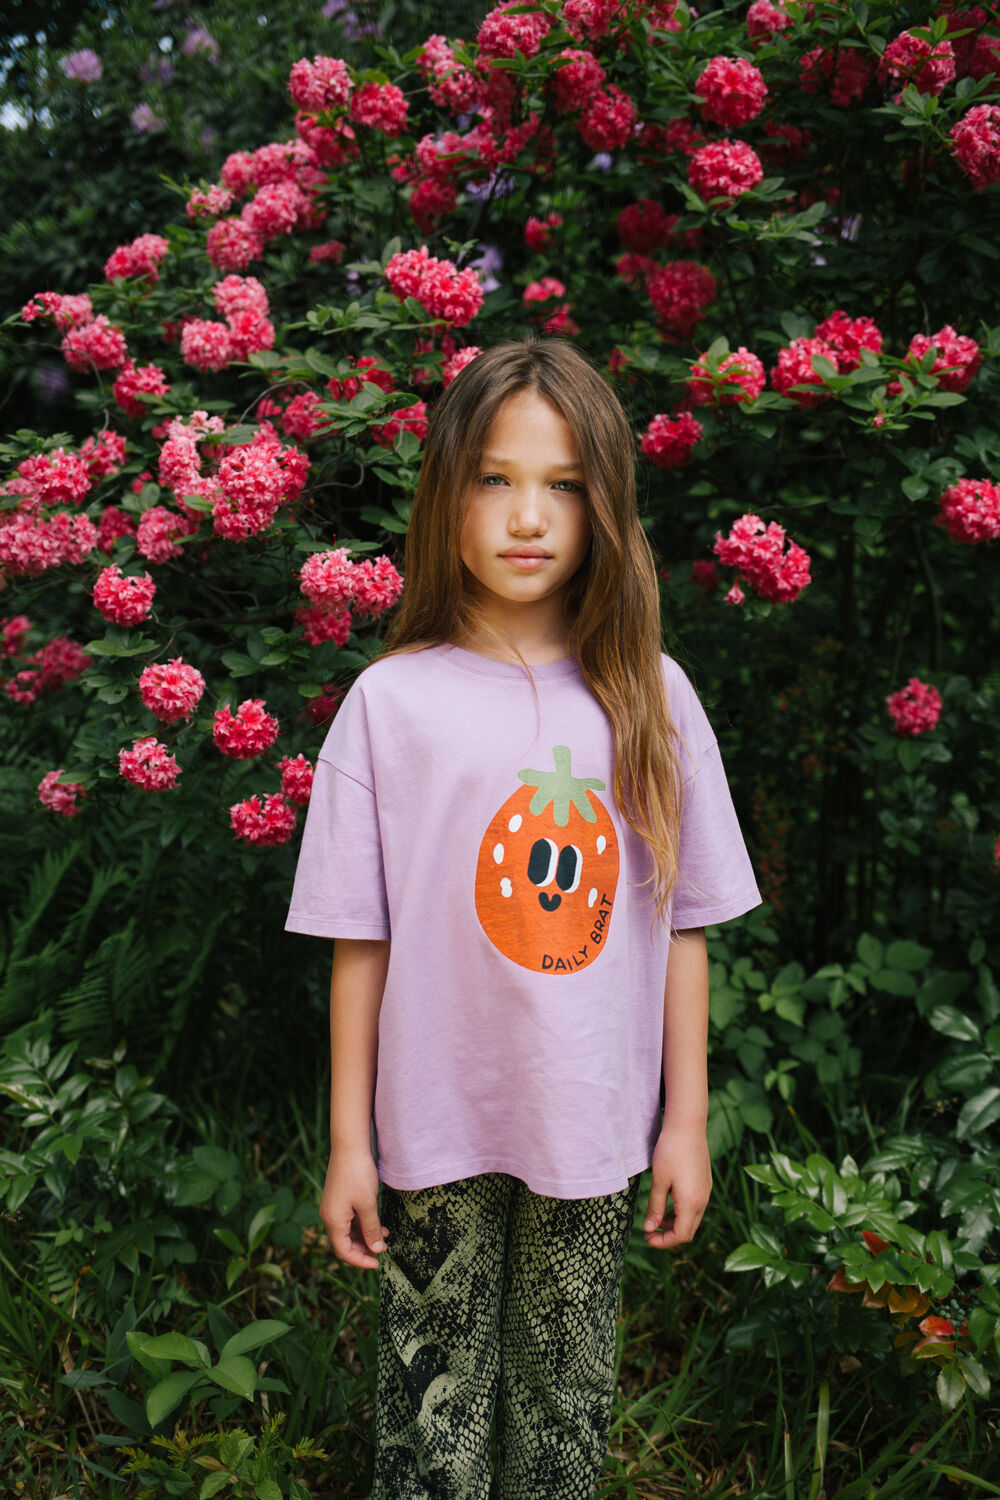 DAILY BRAT Meisjes Tops & T-shirts Berry T-shirt Lila